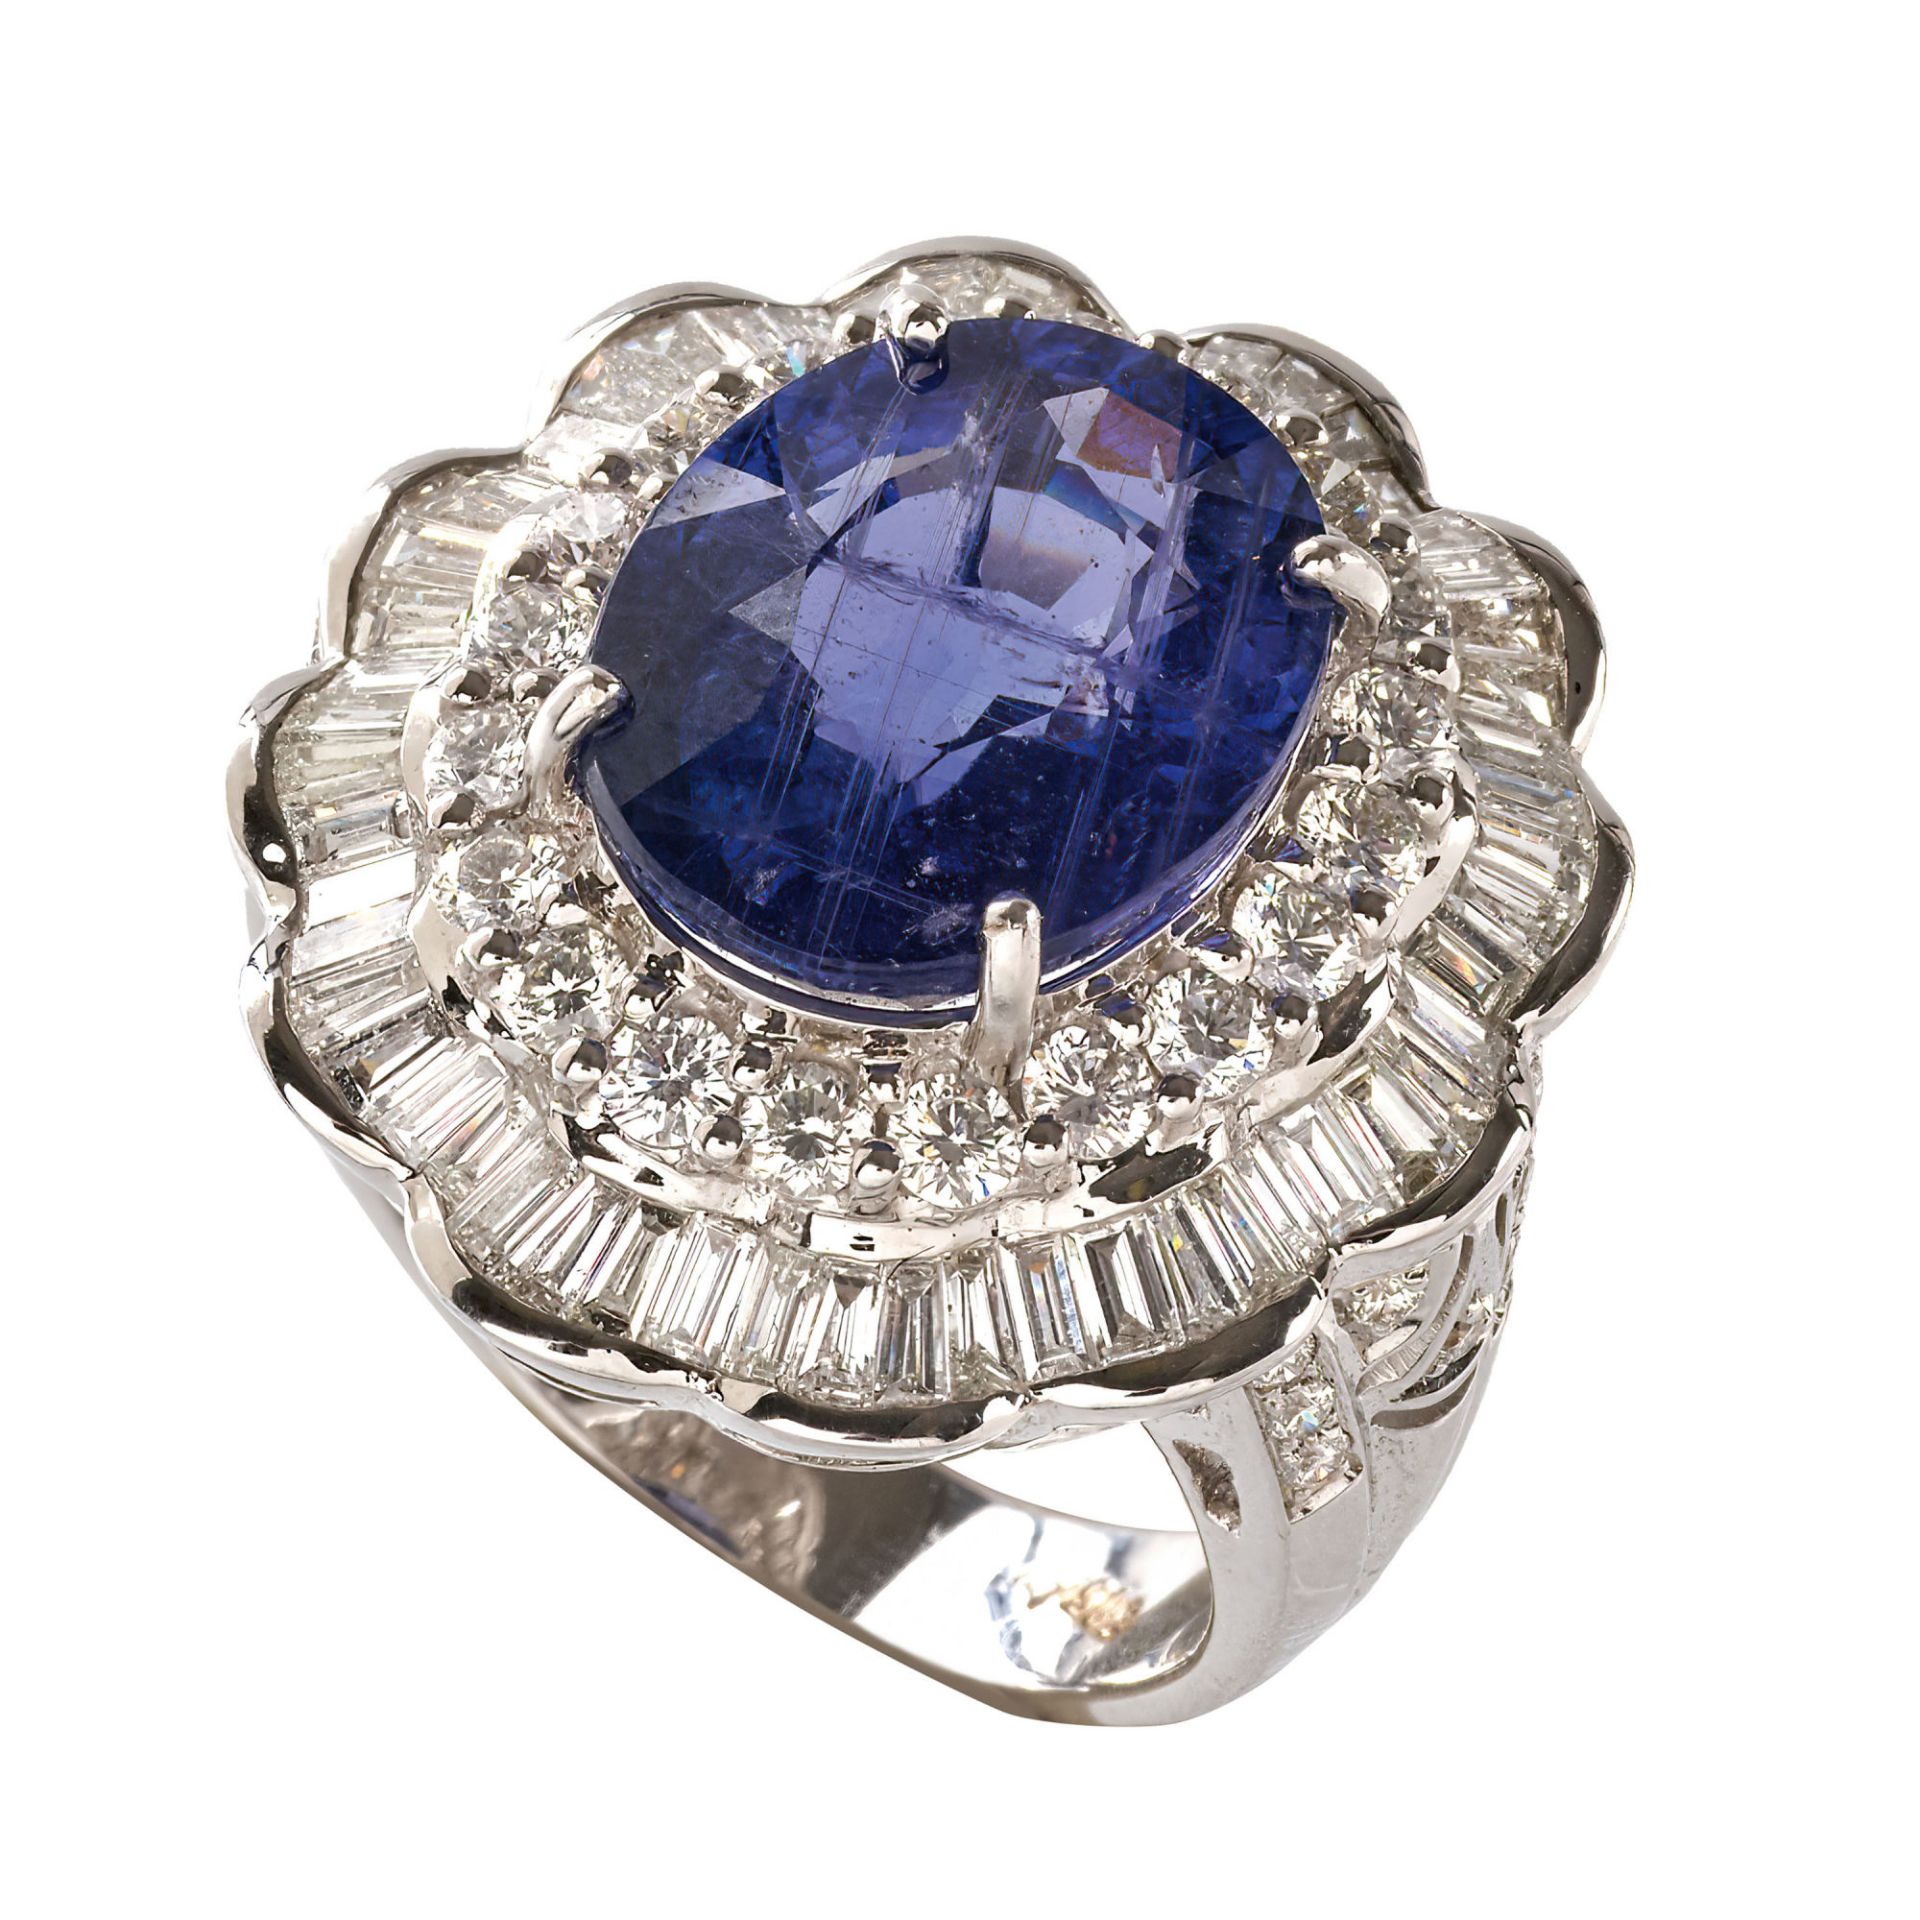 SAPHIR-DIAMANT-RING / Sapphire-diamond-ring 